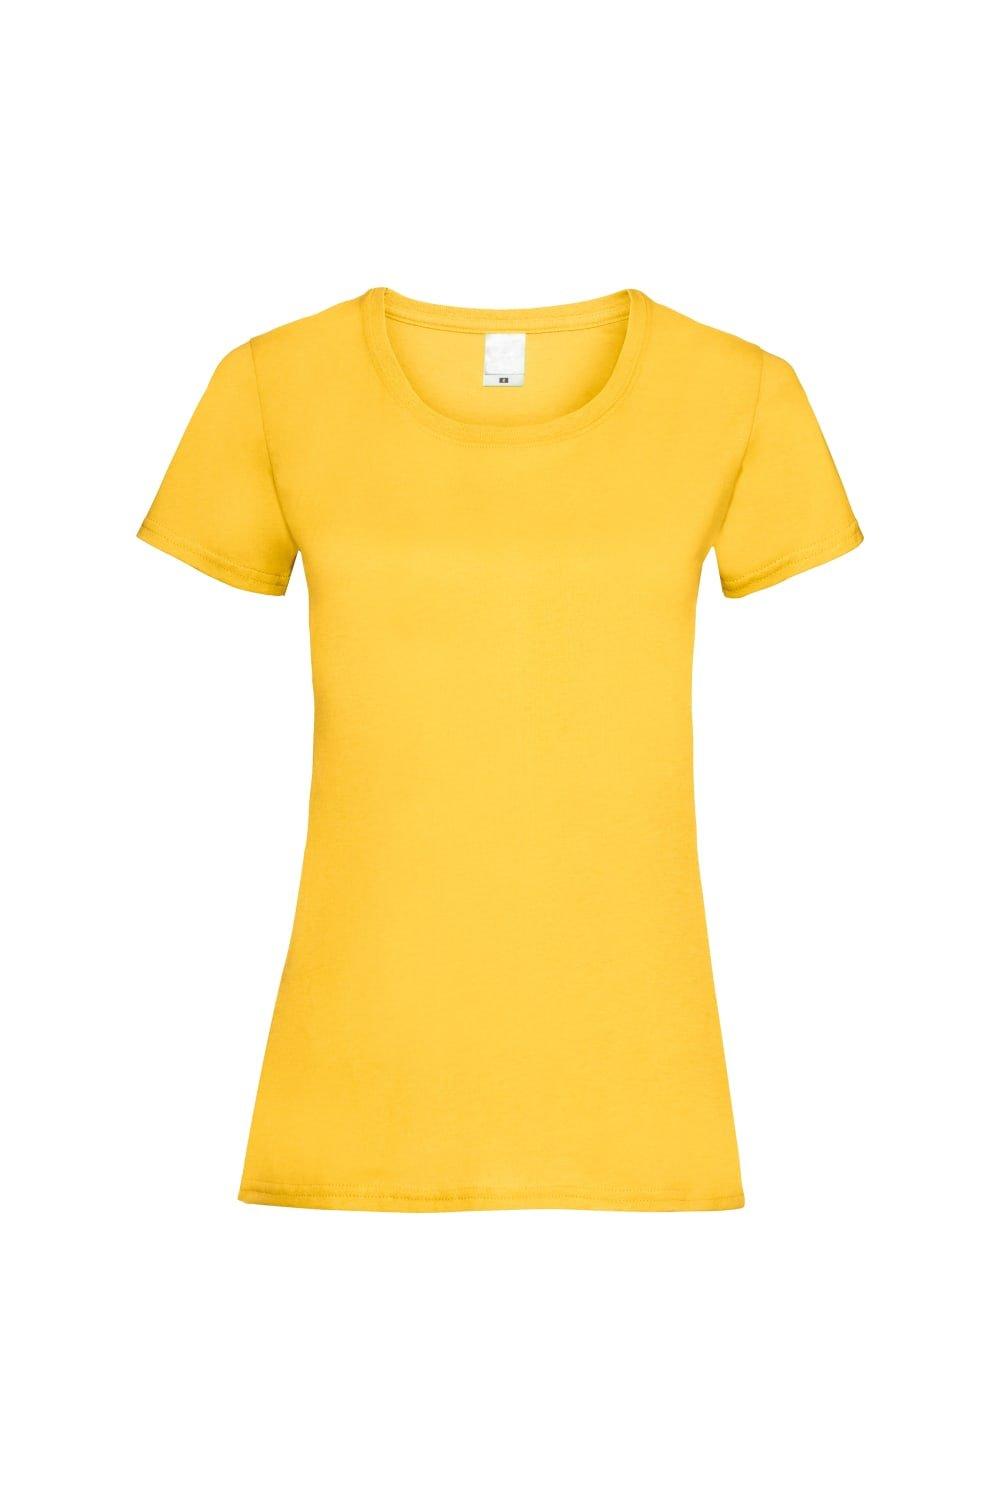 Повседневная футболка с короткими рукавами Value Universal Textiles, золото повседневная футболка value с длинным рукавом universal textiles белый